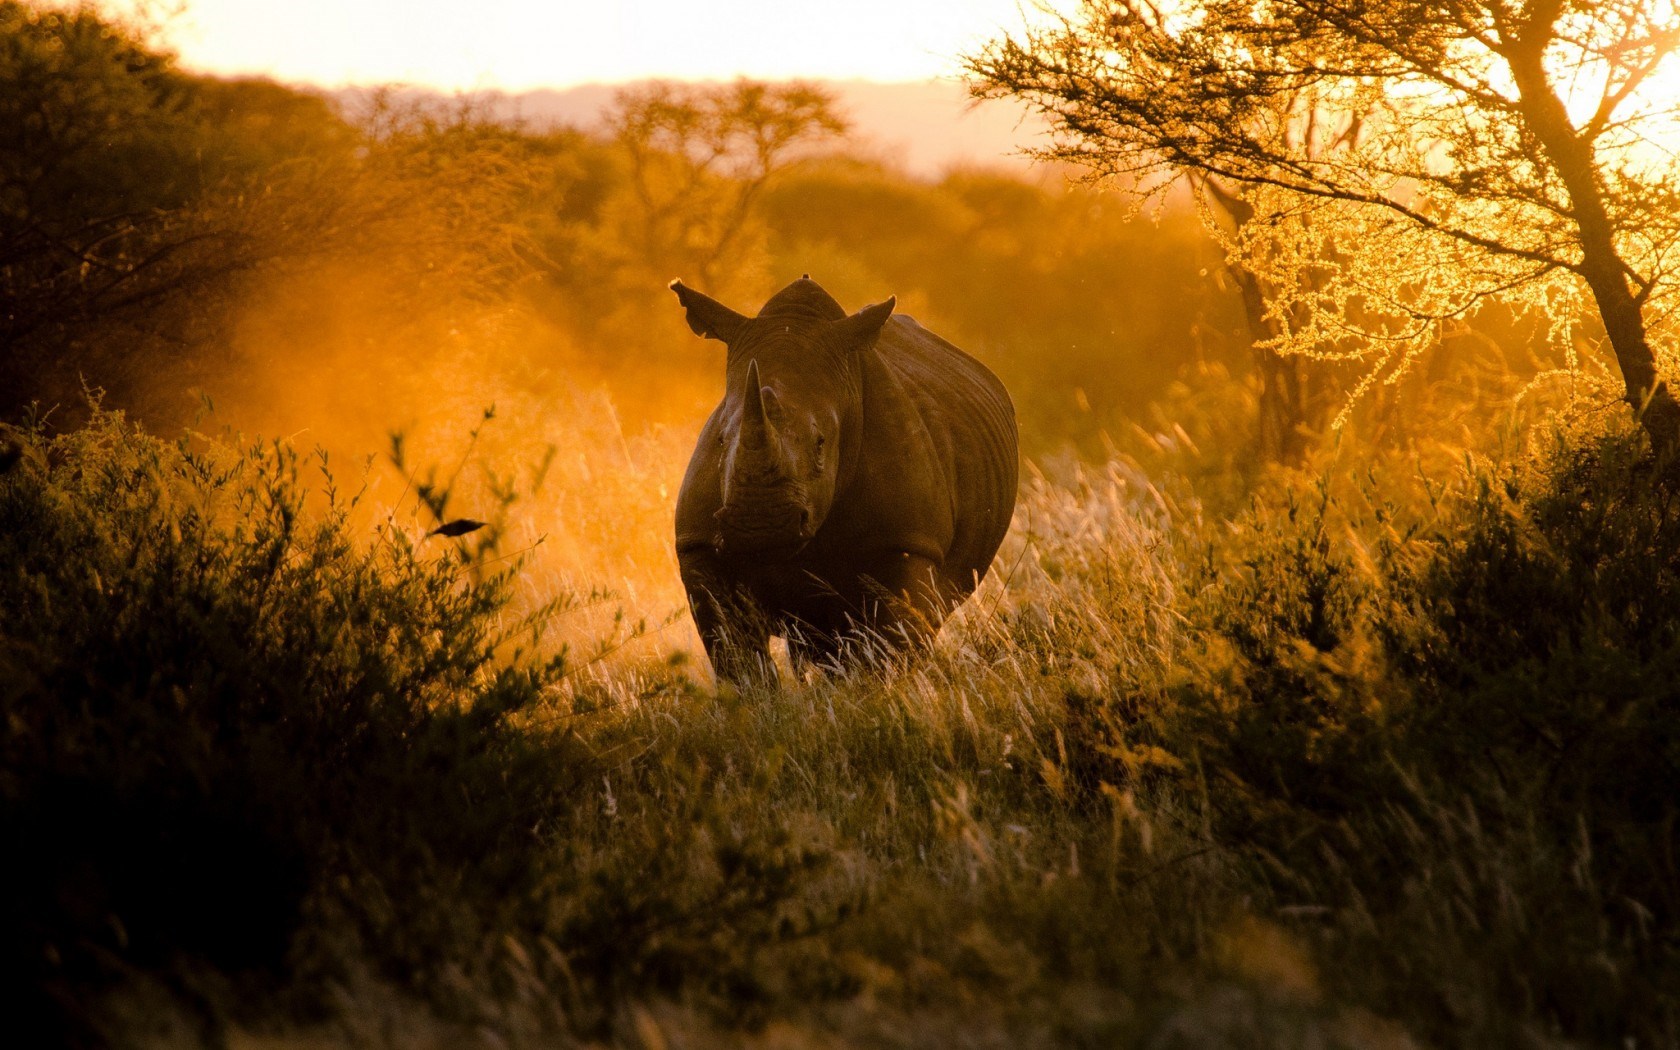 africa fondos de pantalla hd,rinoceronte,fauna silvestre,rinoceronte negro,rinoceronte blanco,paisaje natural